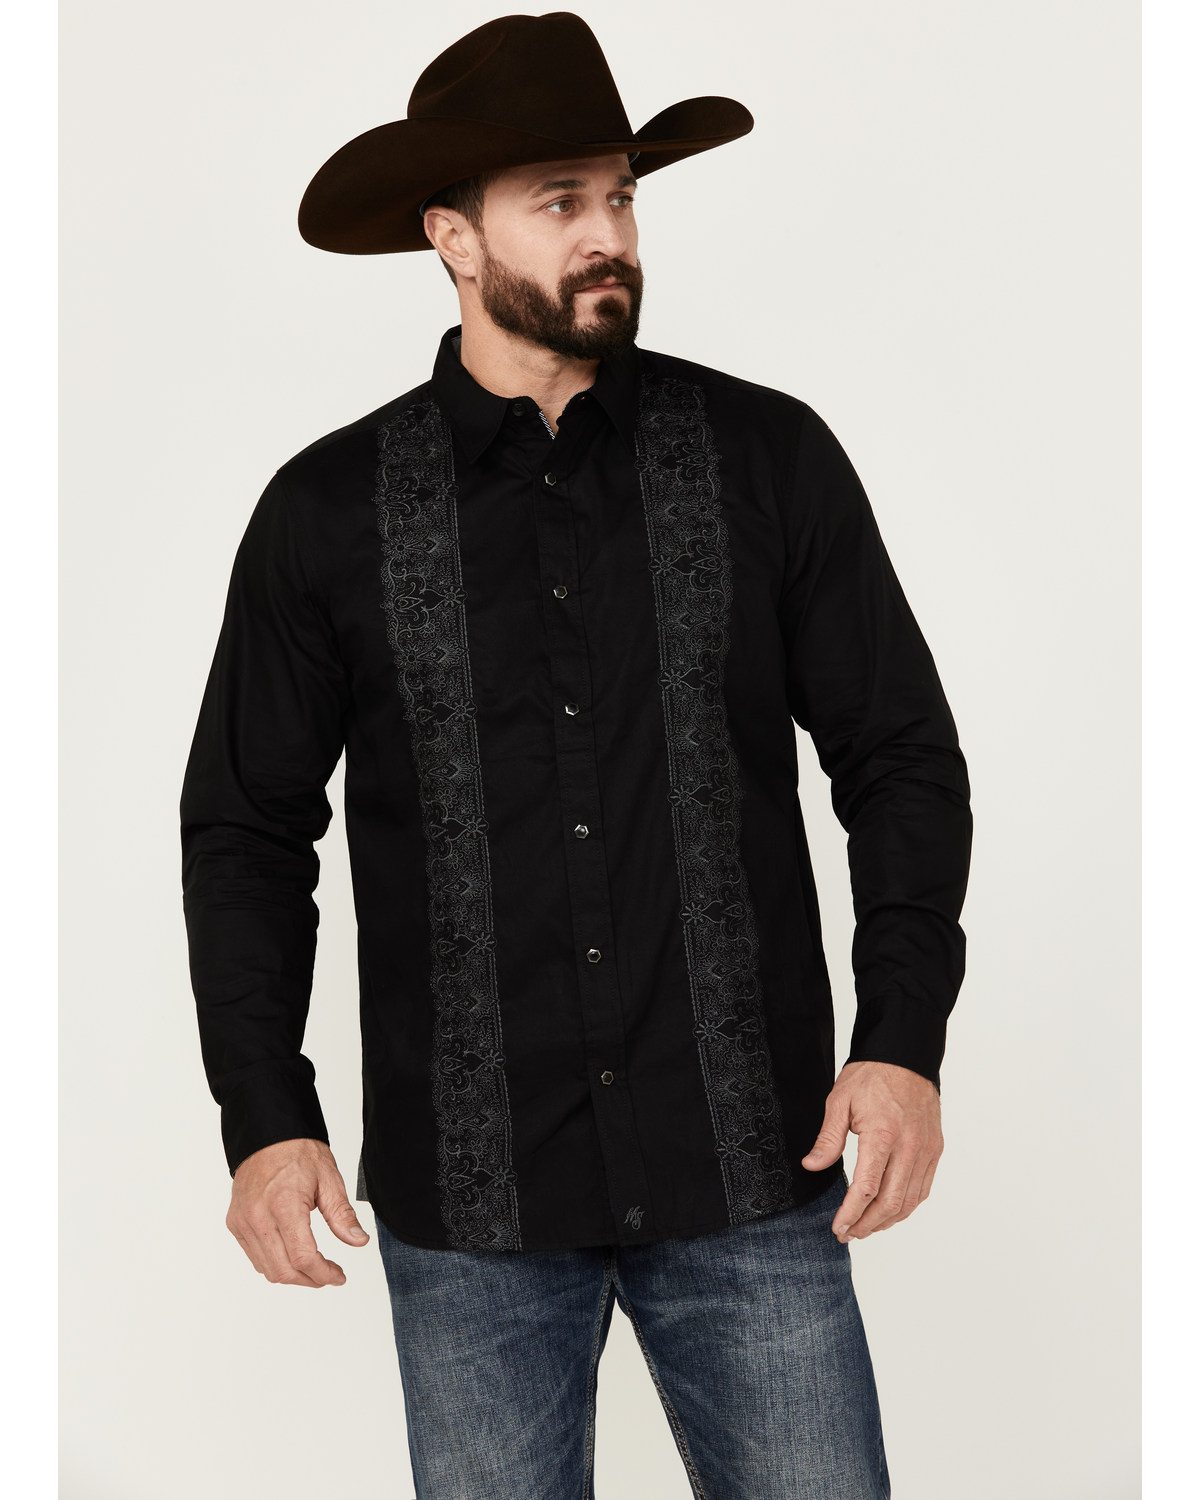 Moonshine Spirit Men's Embroidered Long Sleeve Snap Western Shirt